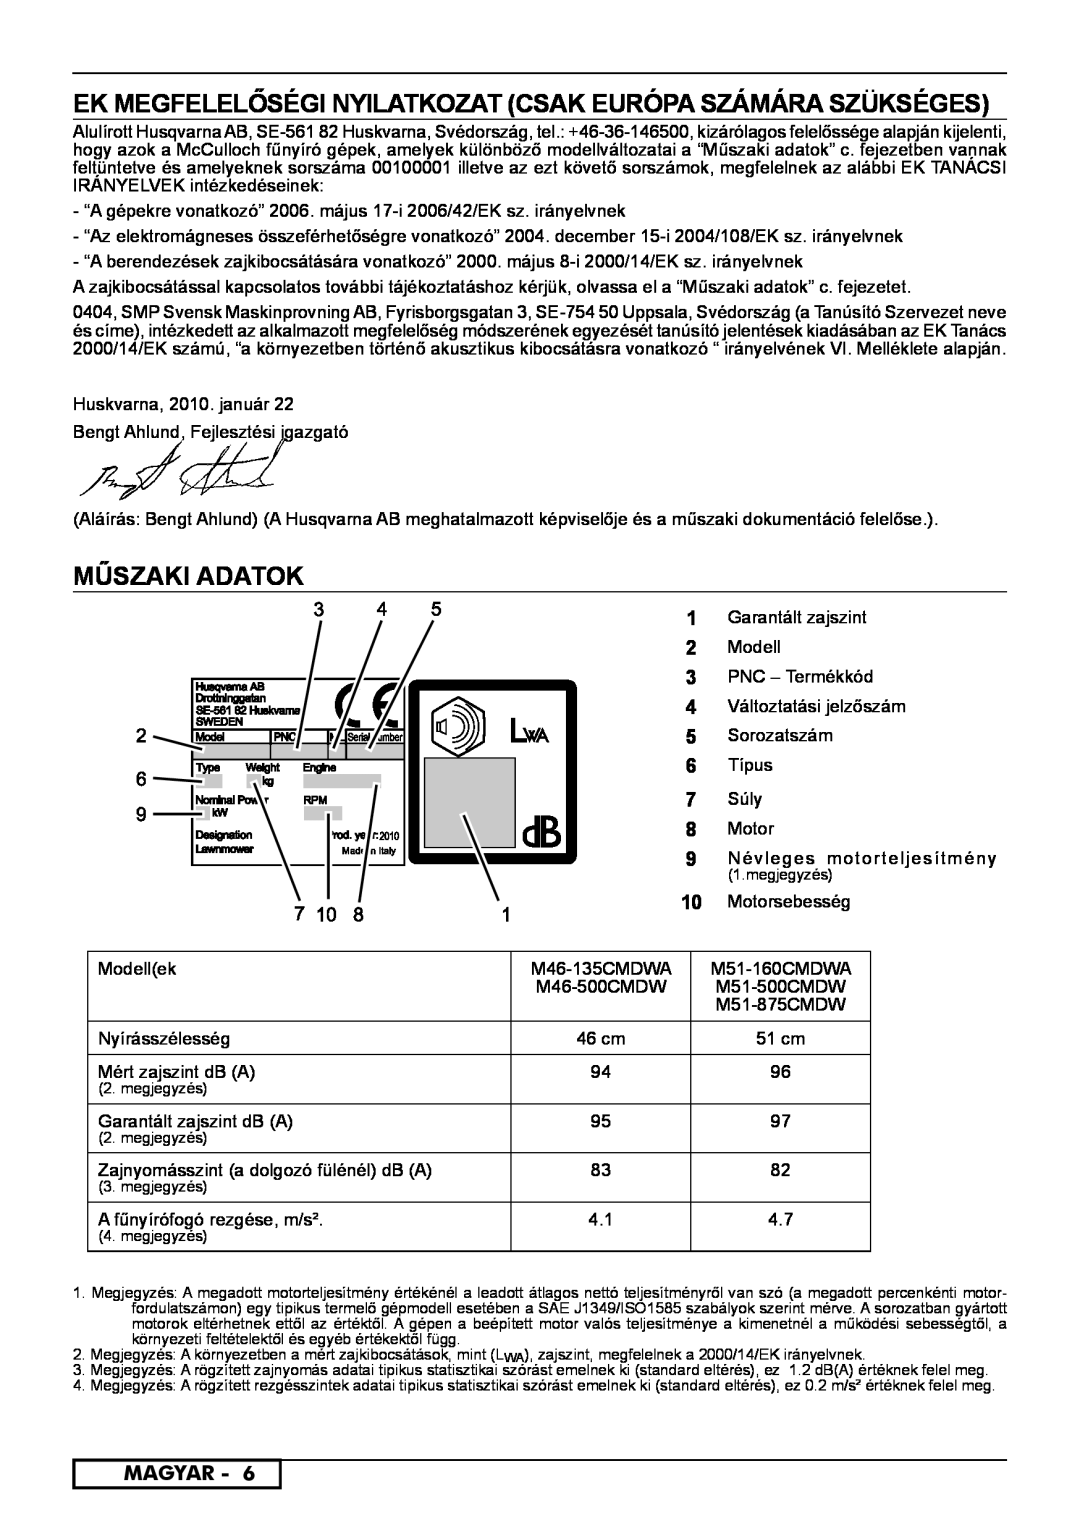 McCulloch 966532001, 966531901, 966531801, 966489001, 966485901 instruction manual Műszaki Adatok, Magyar 